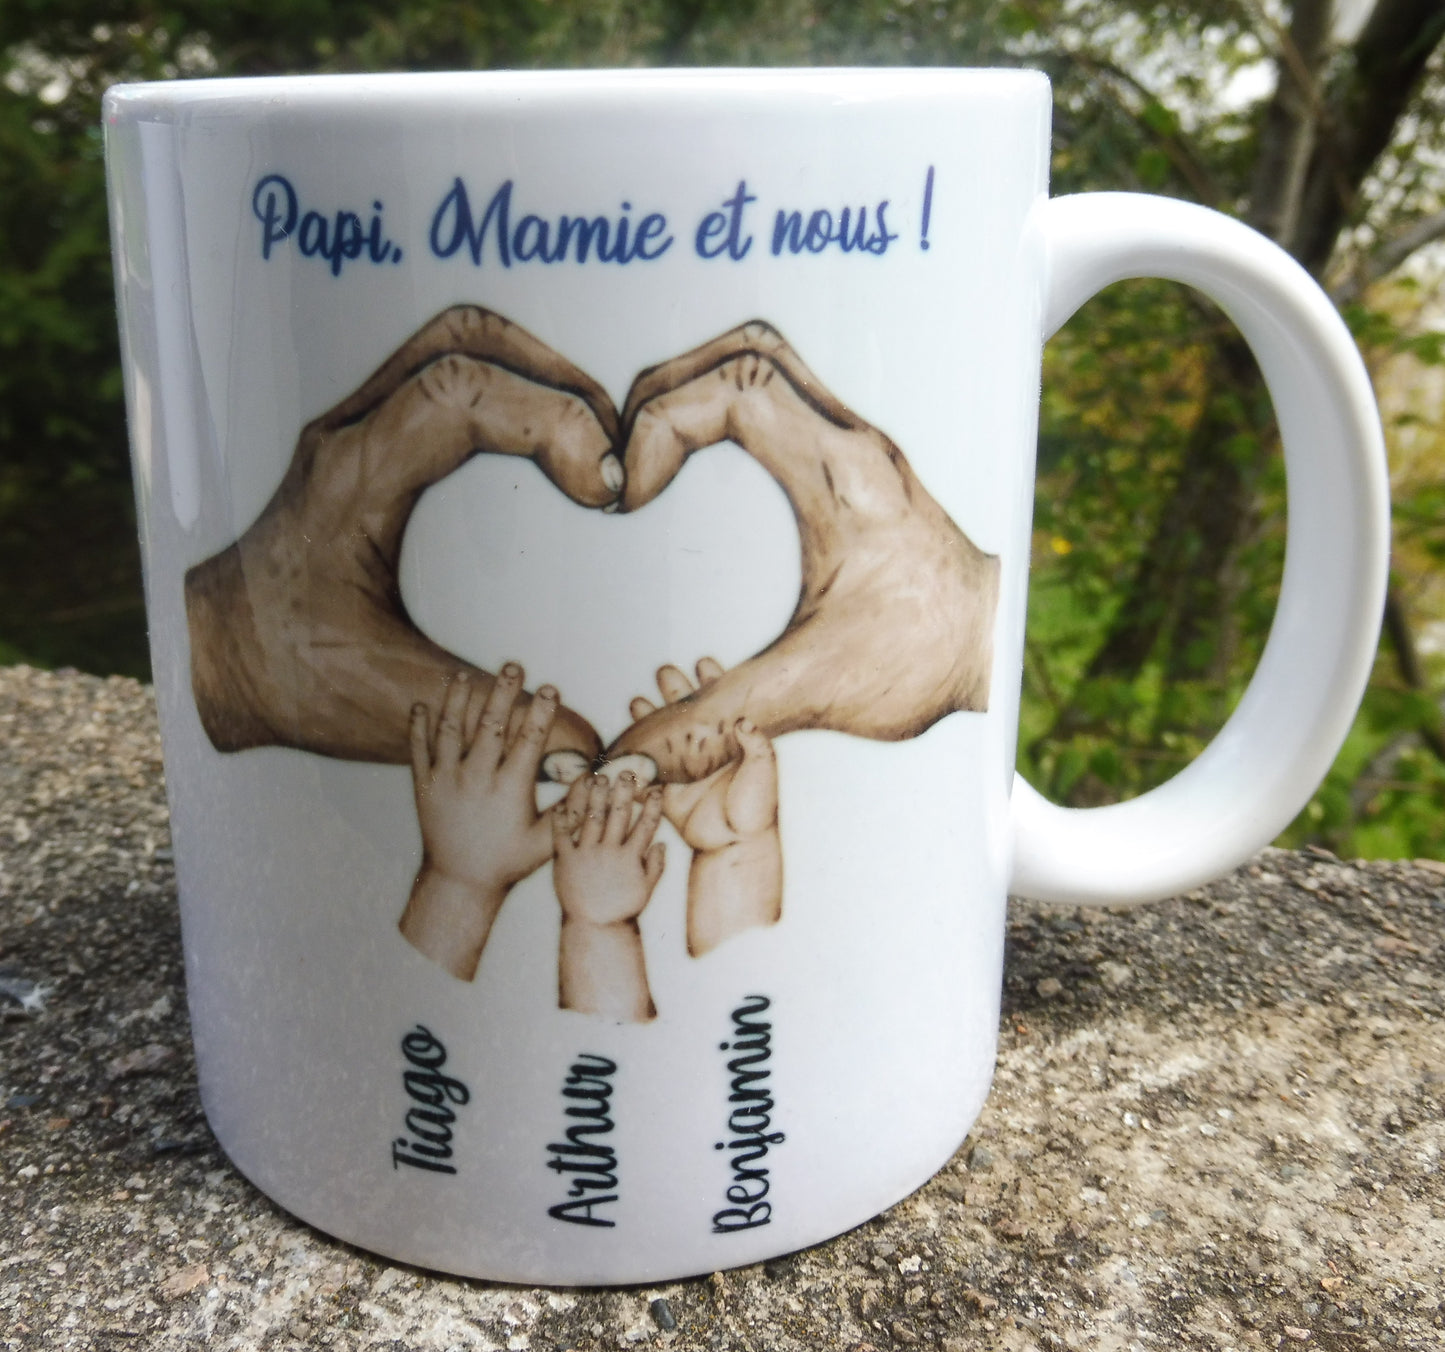 Personalized mug hands of grandpa and grandma and their 2 grandchildren